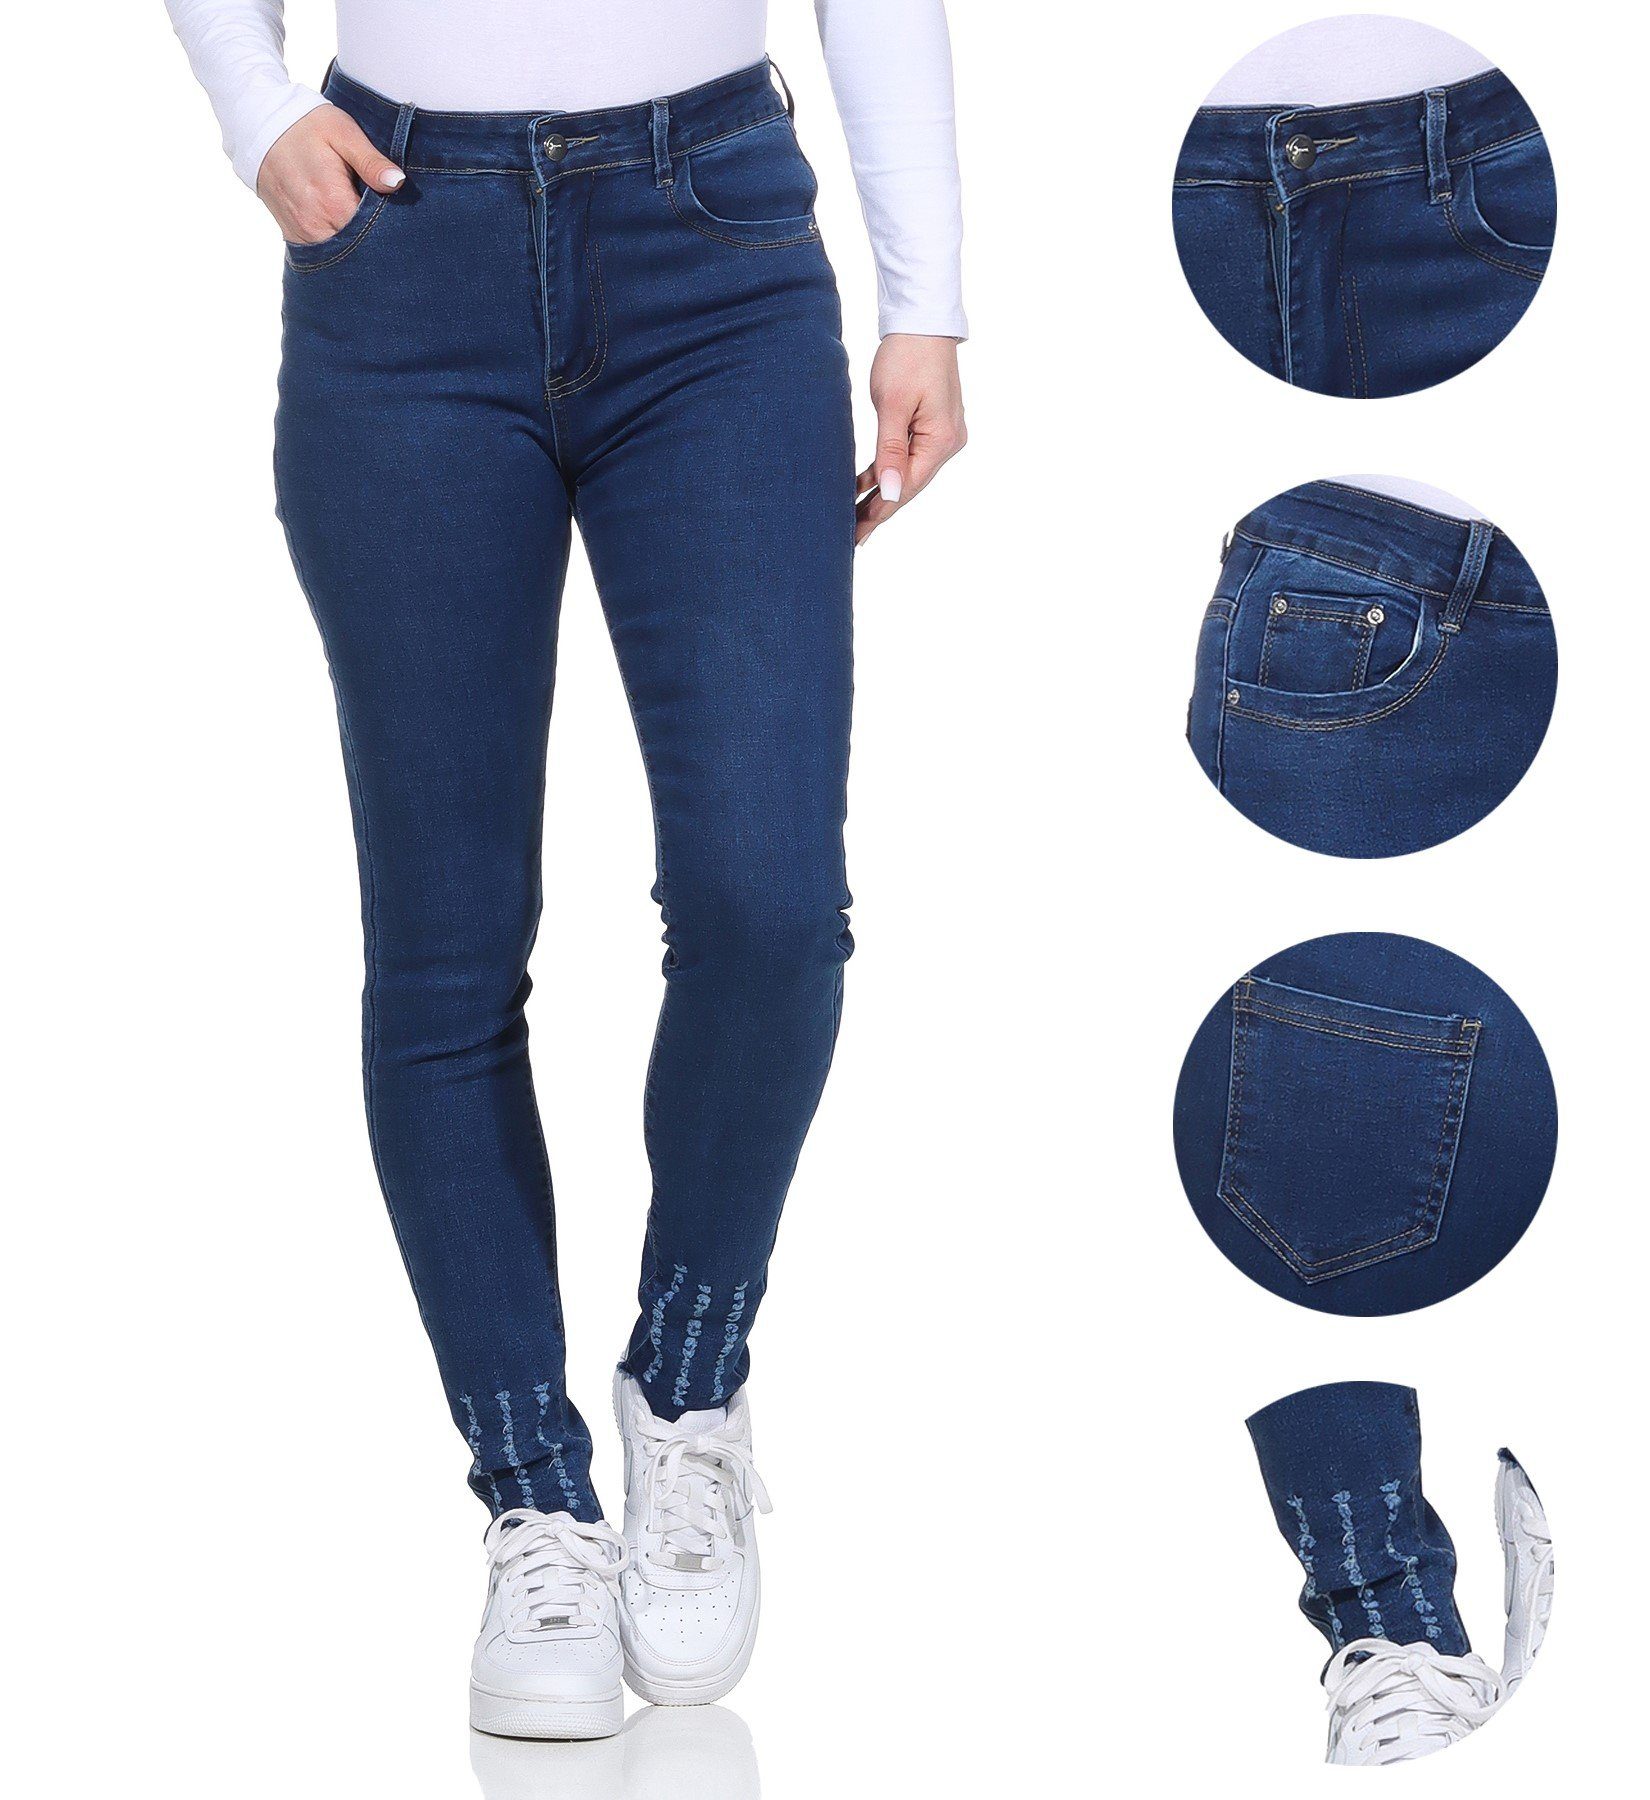 5-Pocket-Jeans Damenmode Look Distressed Jeanshosen Look Stretch Jeans Grau Destroyed für Damen Aurela moderner